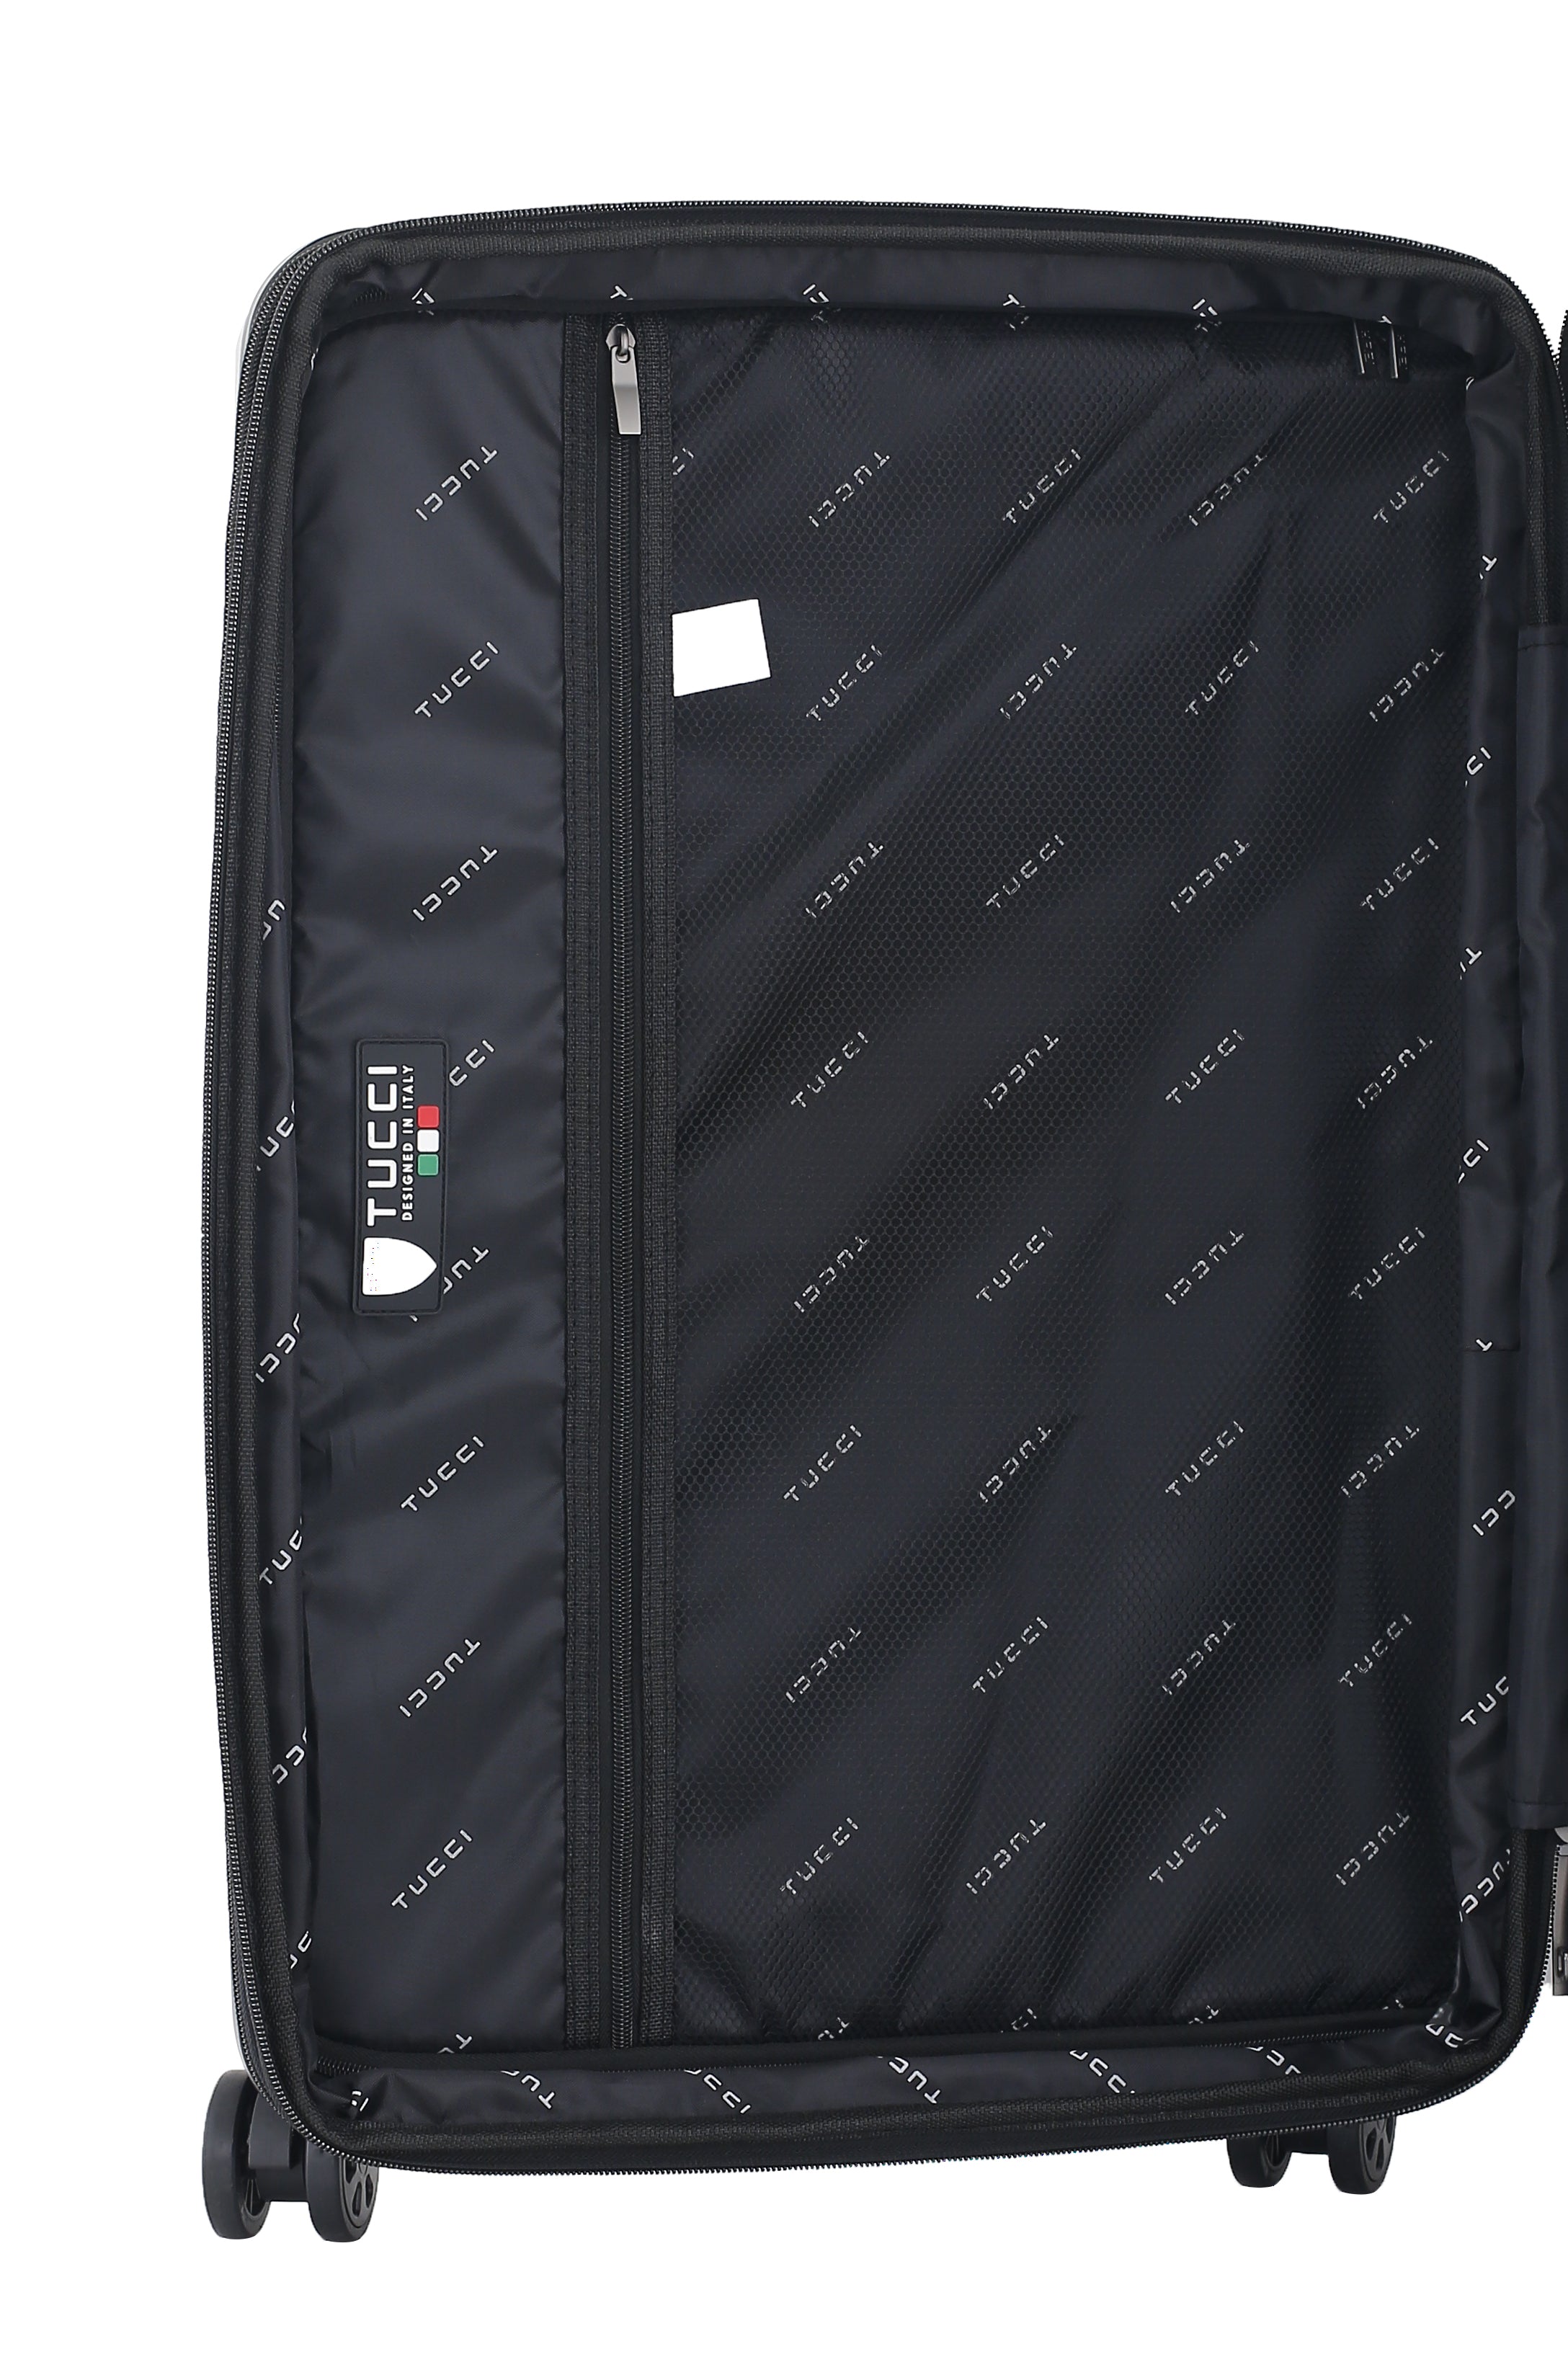 TUCCI Dinero Money Man 3 PC SET (20", 24", 28") Luggage